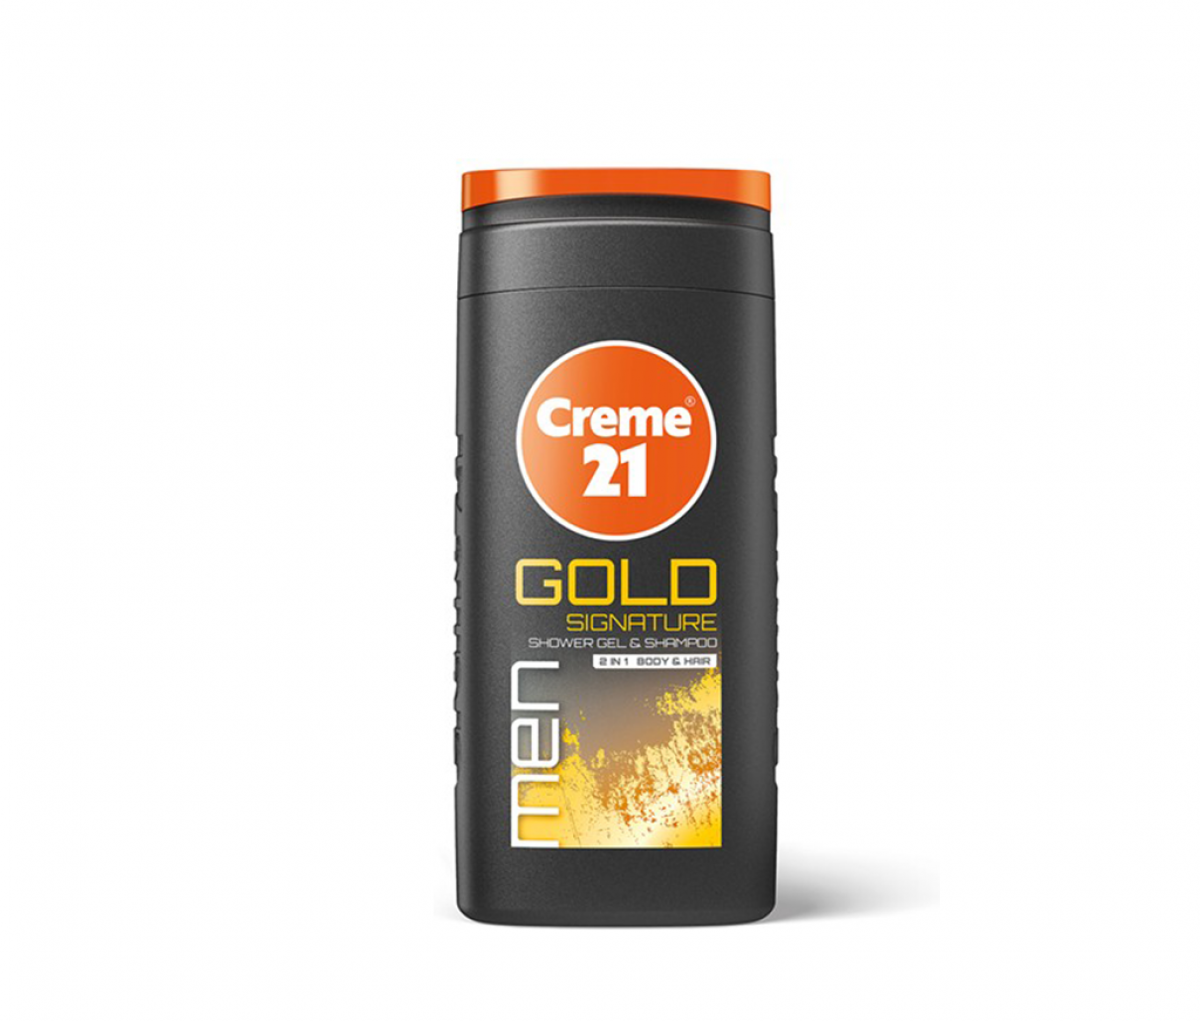 Creme21 Shower gel   shampoo gold Signature 